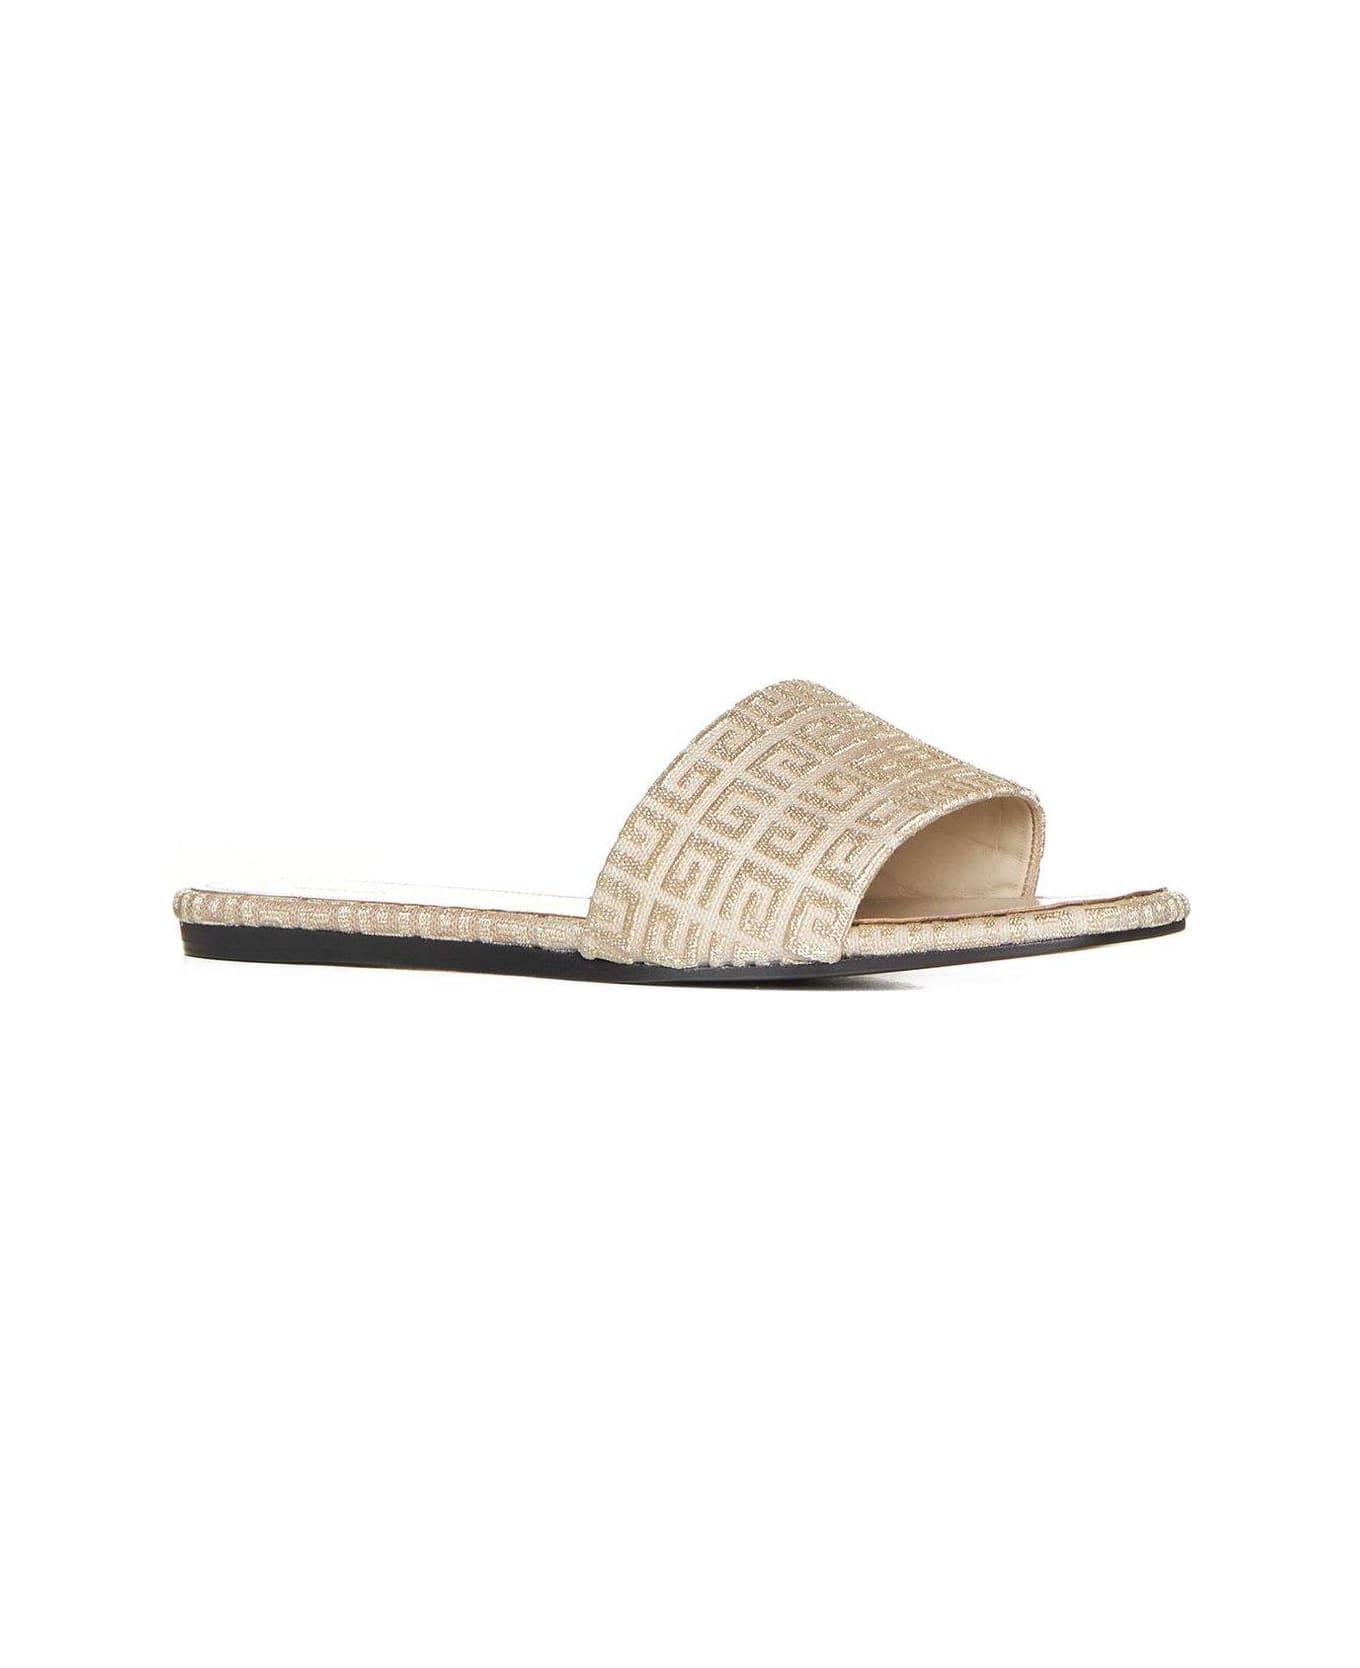 Givenchy 4g Motif Open-toe Sandals - Golden